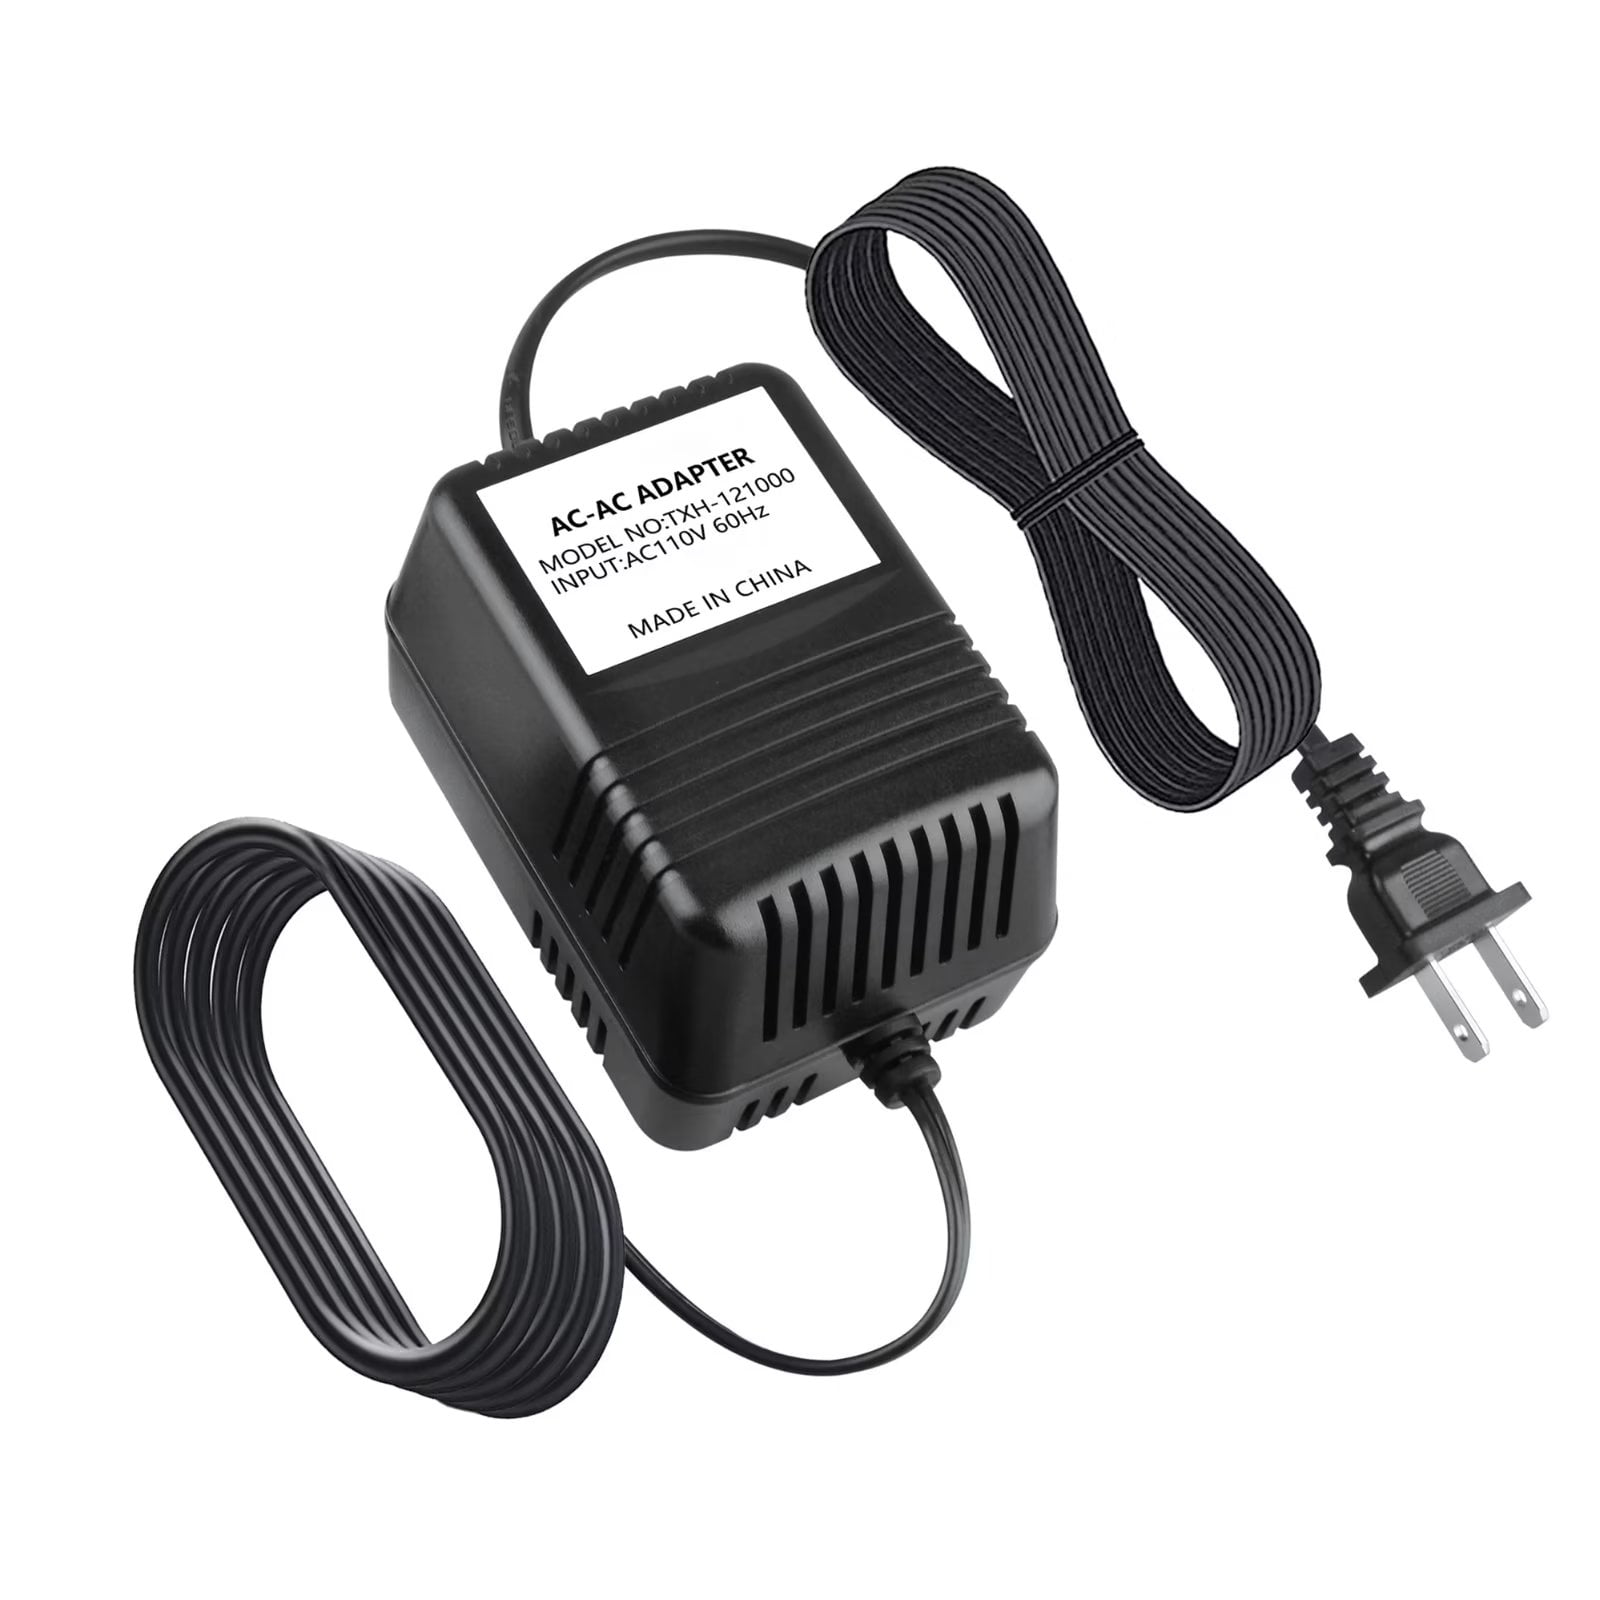 Statistisk Forkæle Politibetjent CJP-Geek AC Adapter Charger compatible with Boss ME-8/8B SX-700 SP-505 VF-1  Roland Power Supply PSU - Walmart.com